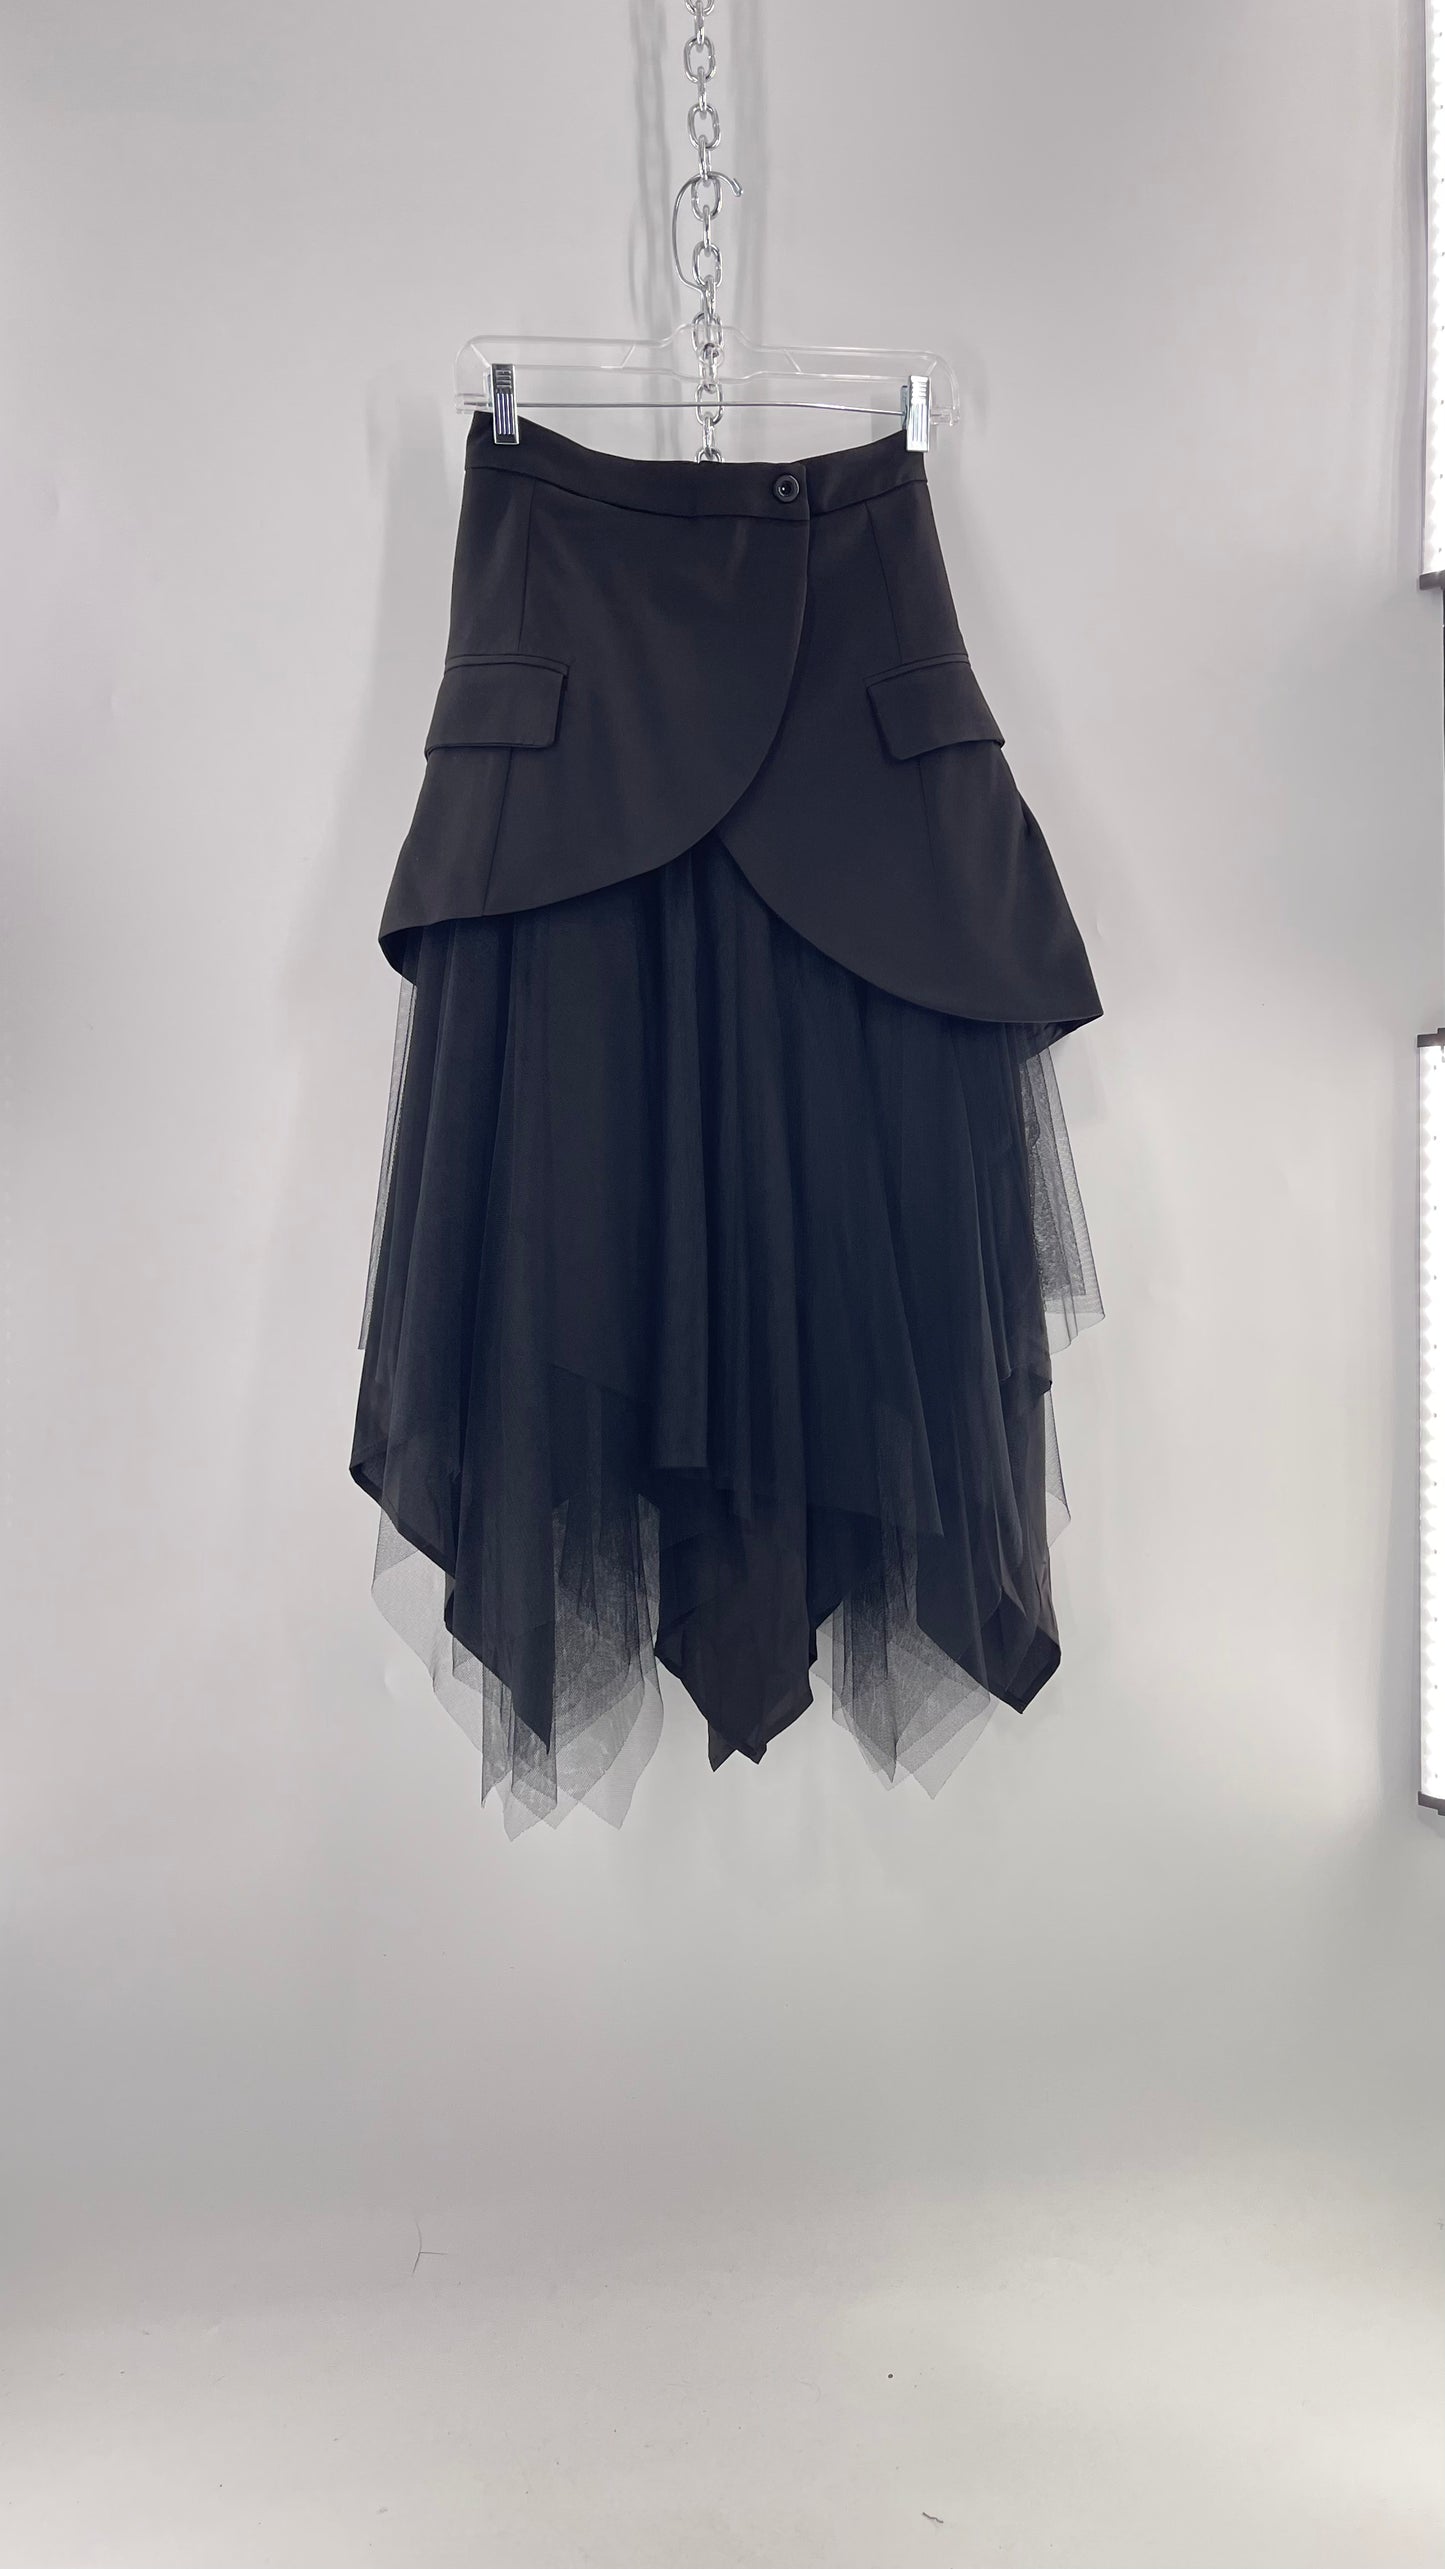 Two Twin Style Black Blazer Skirt with Mesh Tulle Layered Handkerchief Hem (S)